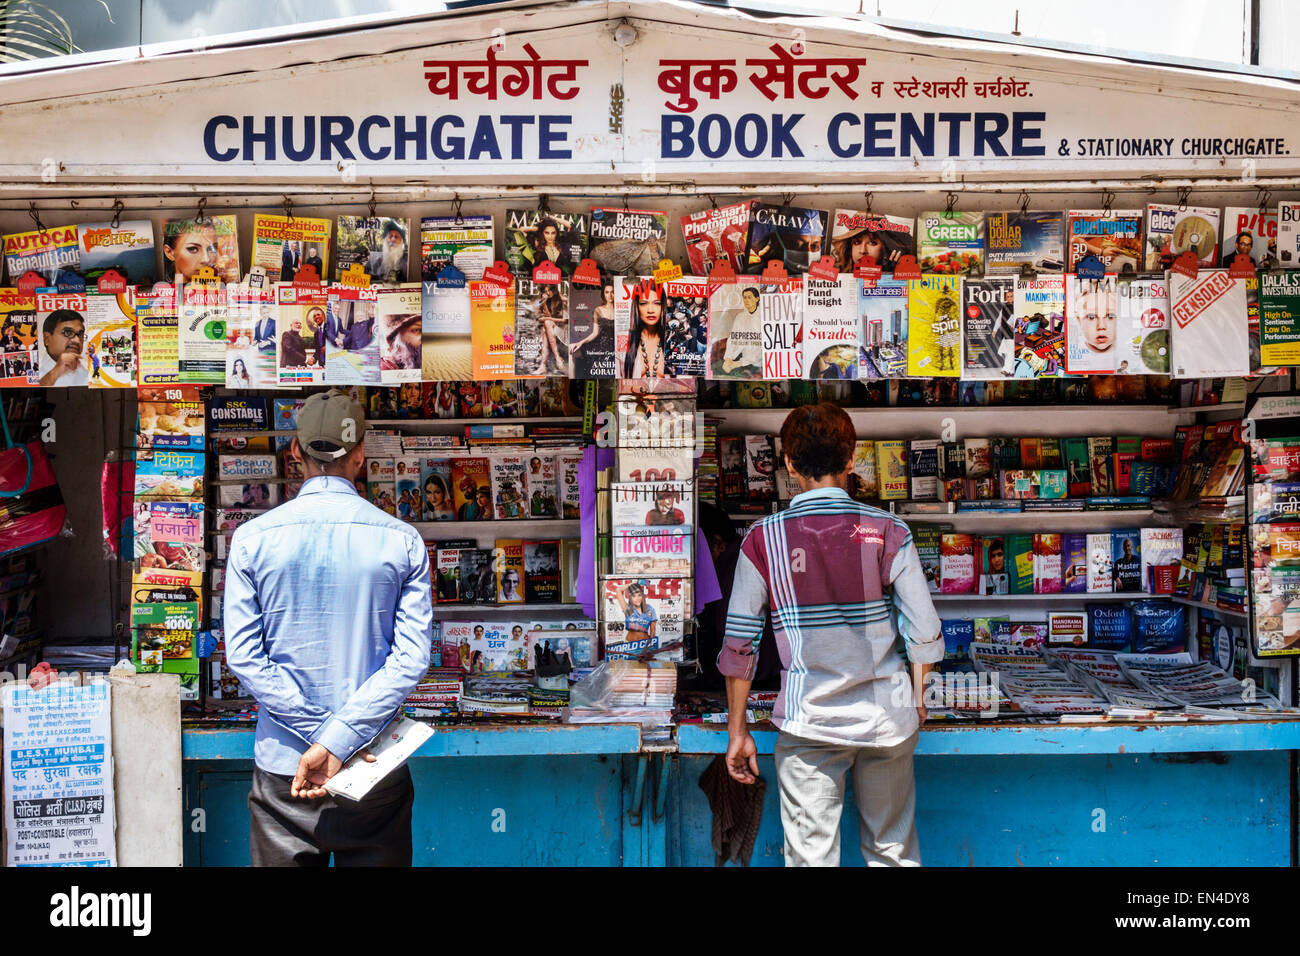 Mumbai India,Churchgate,Veer Nariman Road,Churchgate Book Centre,center,English Marathi,newsstand,magazines,display sale India150226119 Stock Photo